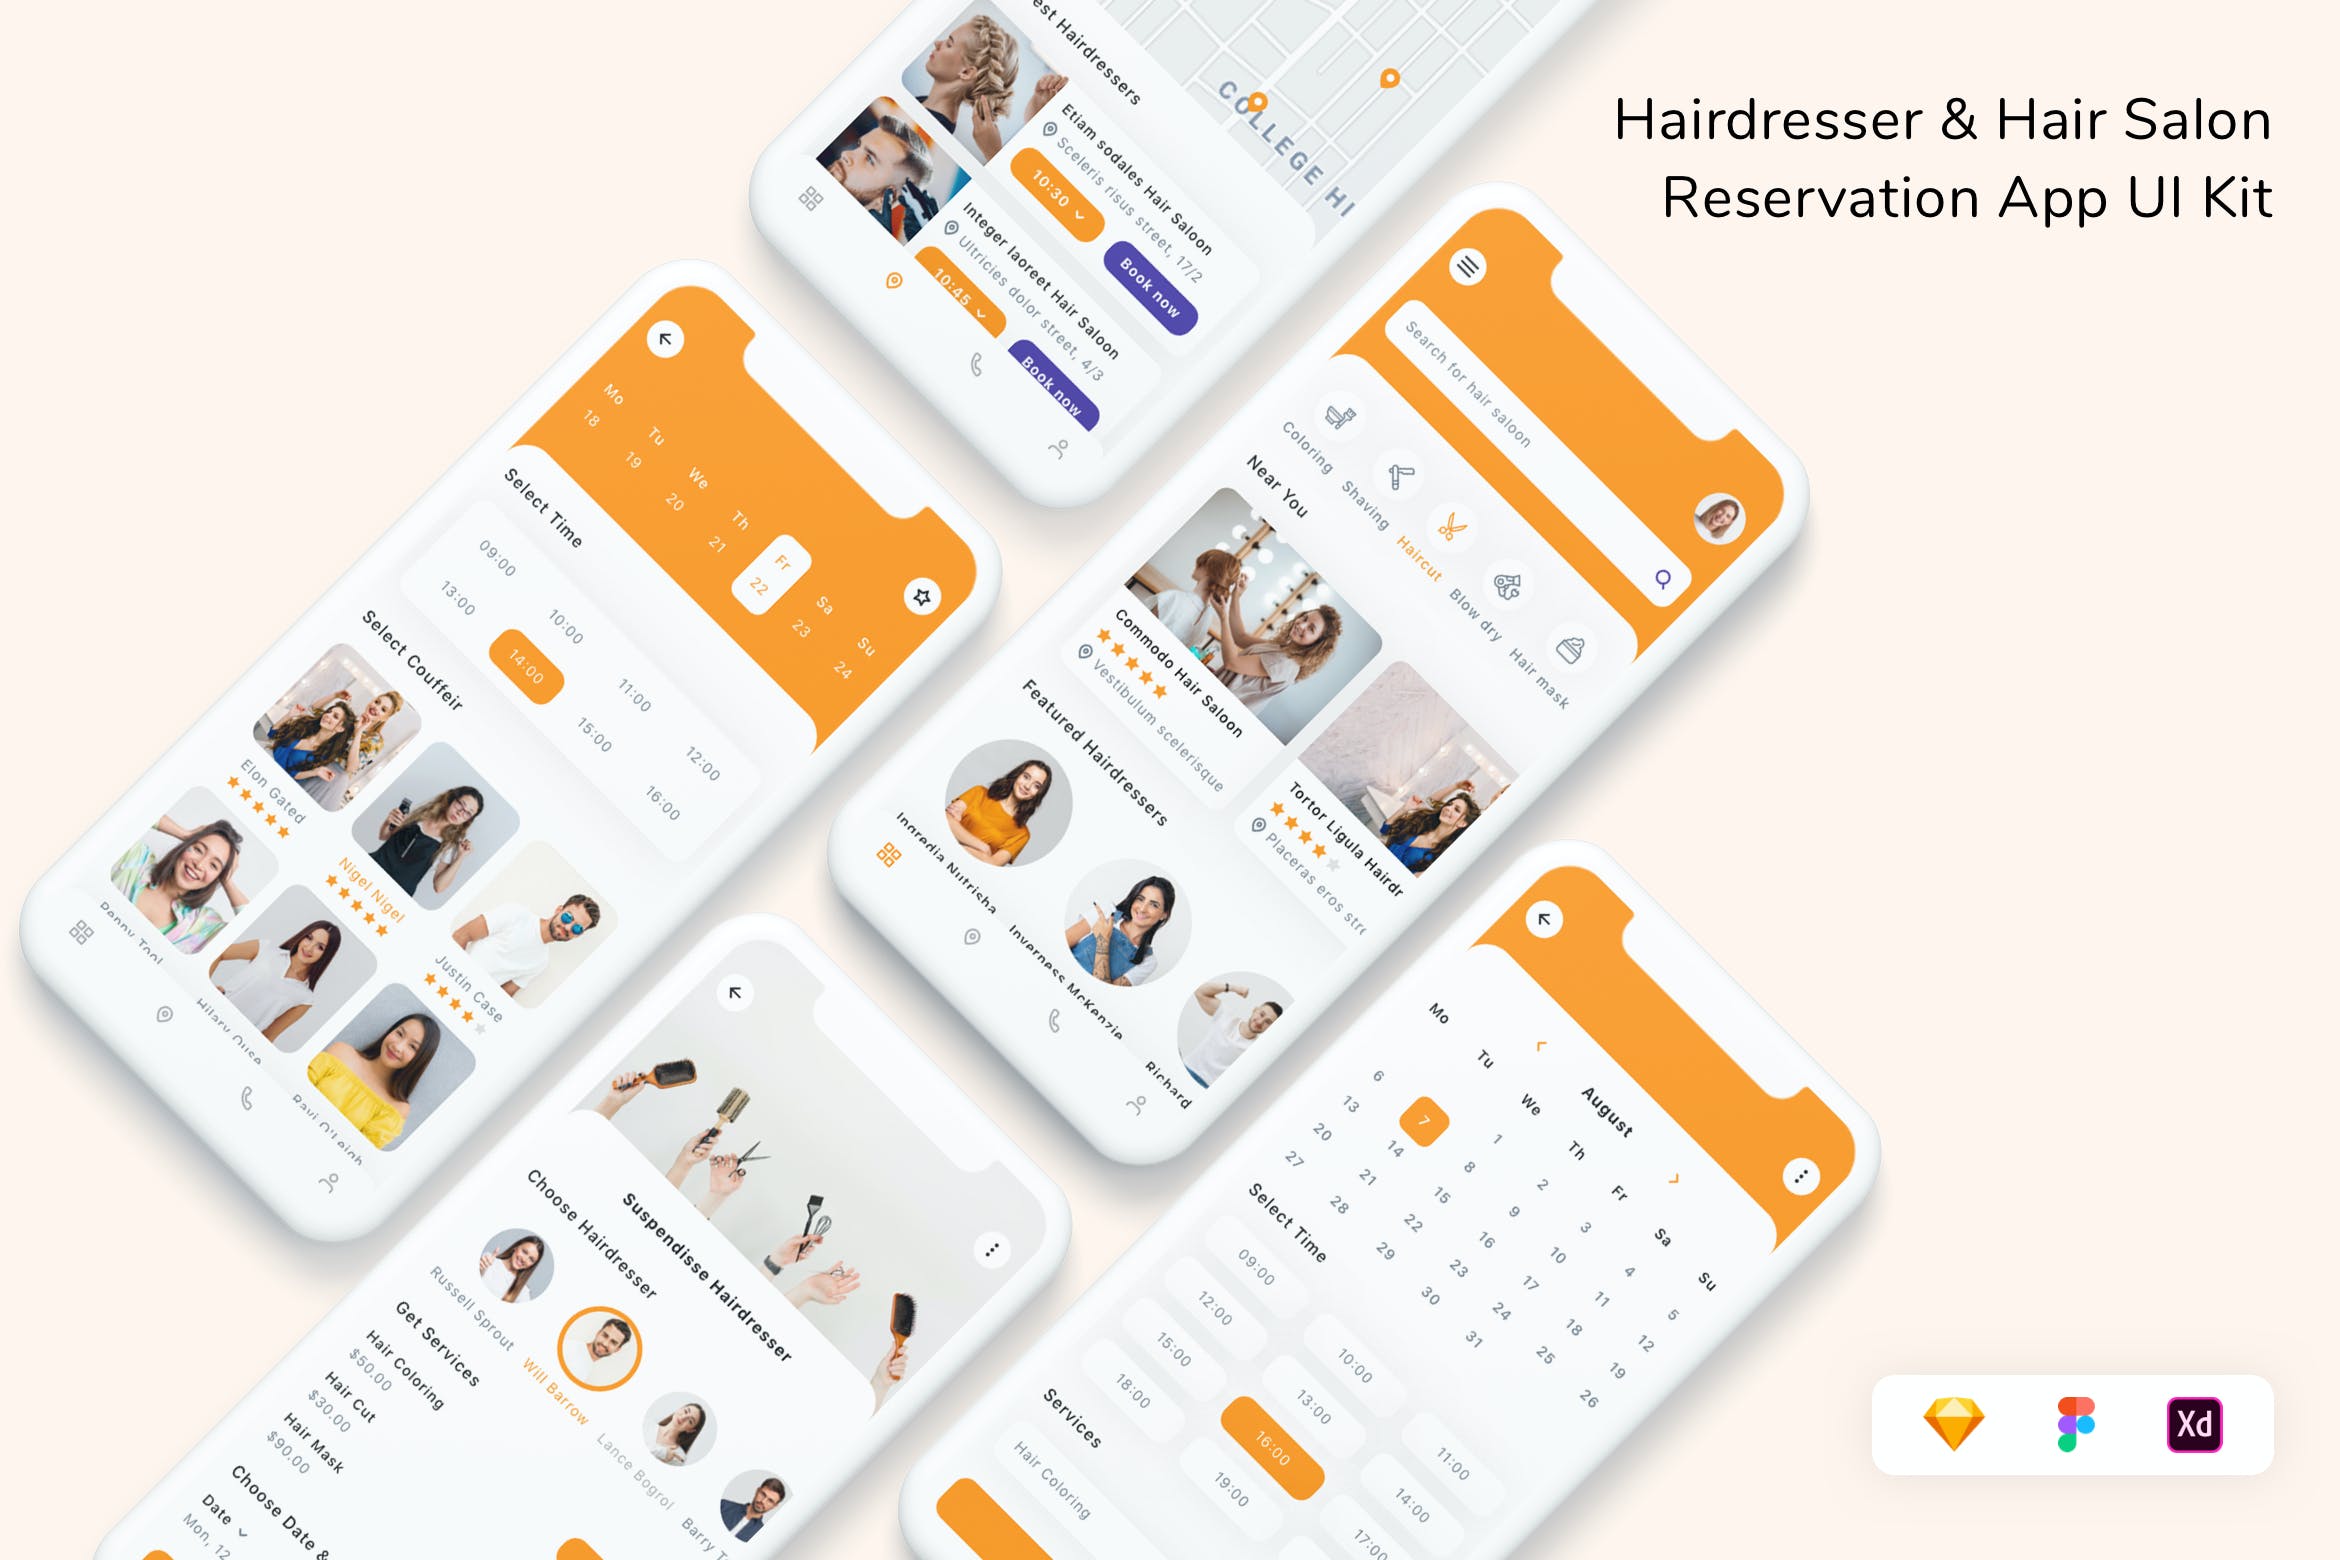 美发师和美发沙龙预订App UI界面设计套件 Hairdresser & Hair Salon Reservation App UI Kit